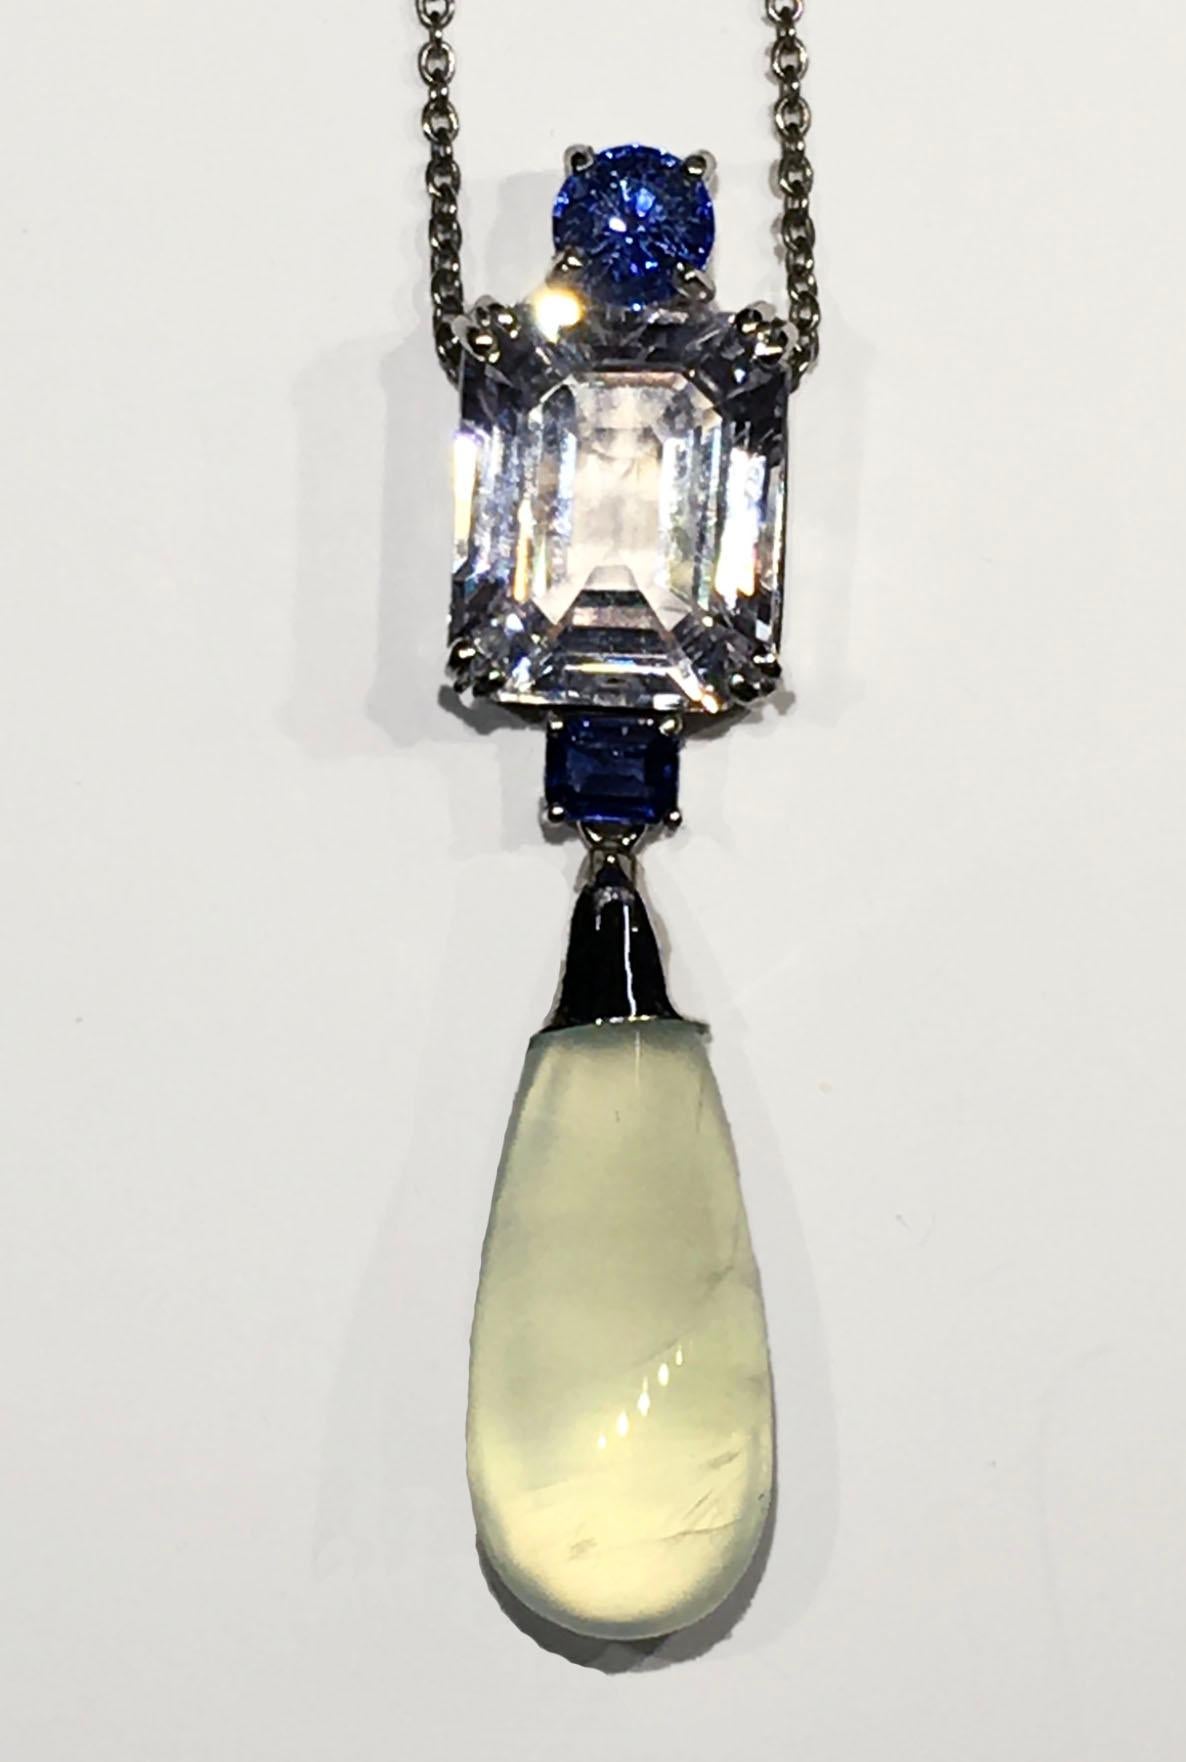 18kt White Gold Pendant with Sapphire, Morganite and Prehnite 4